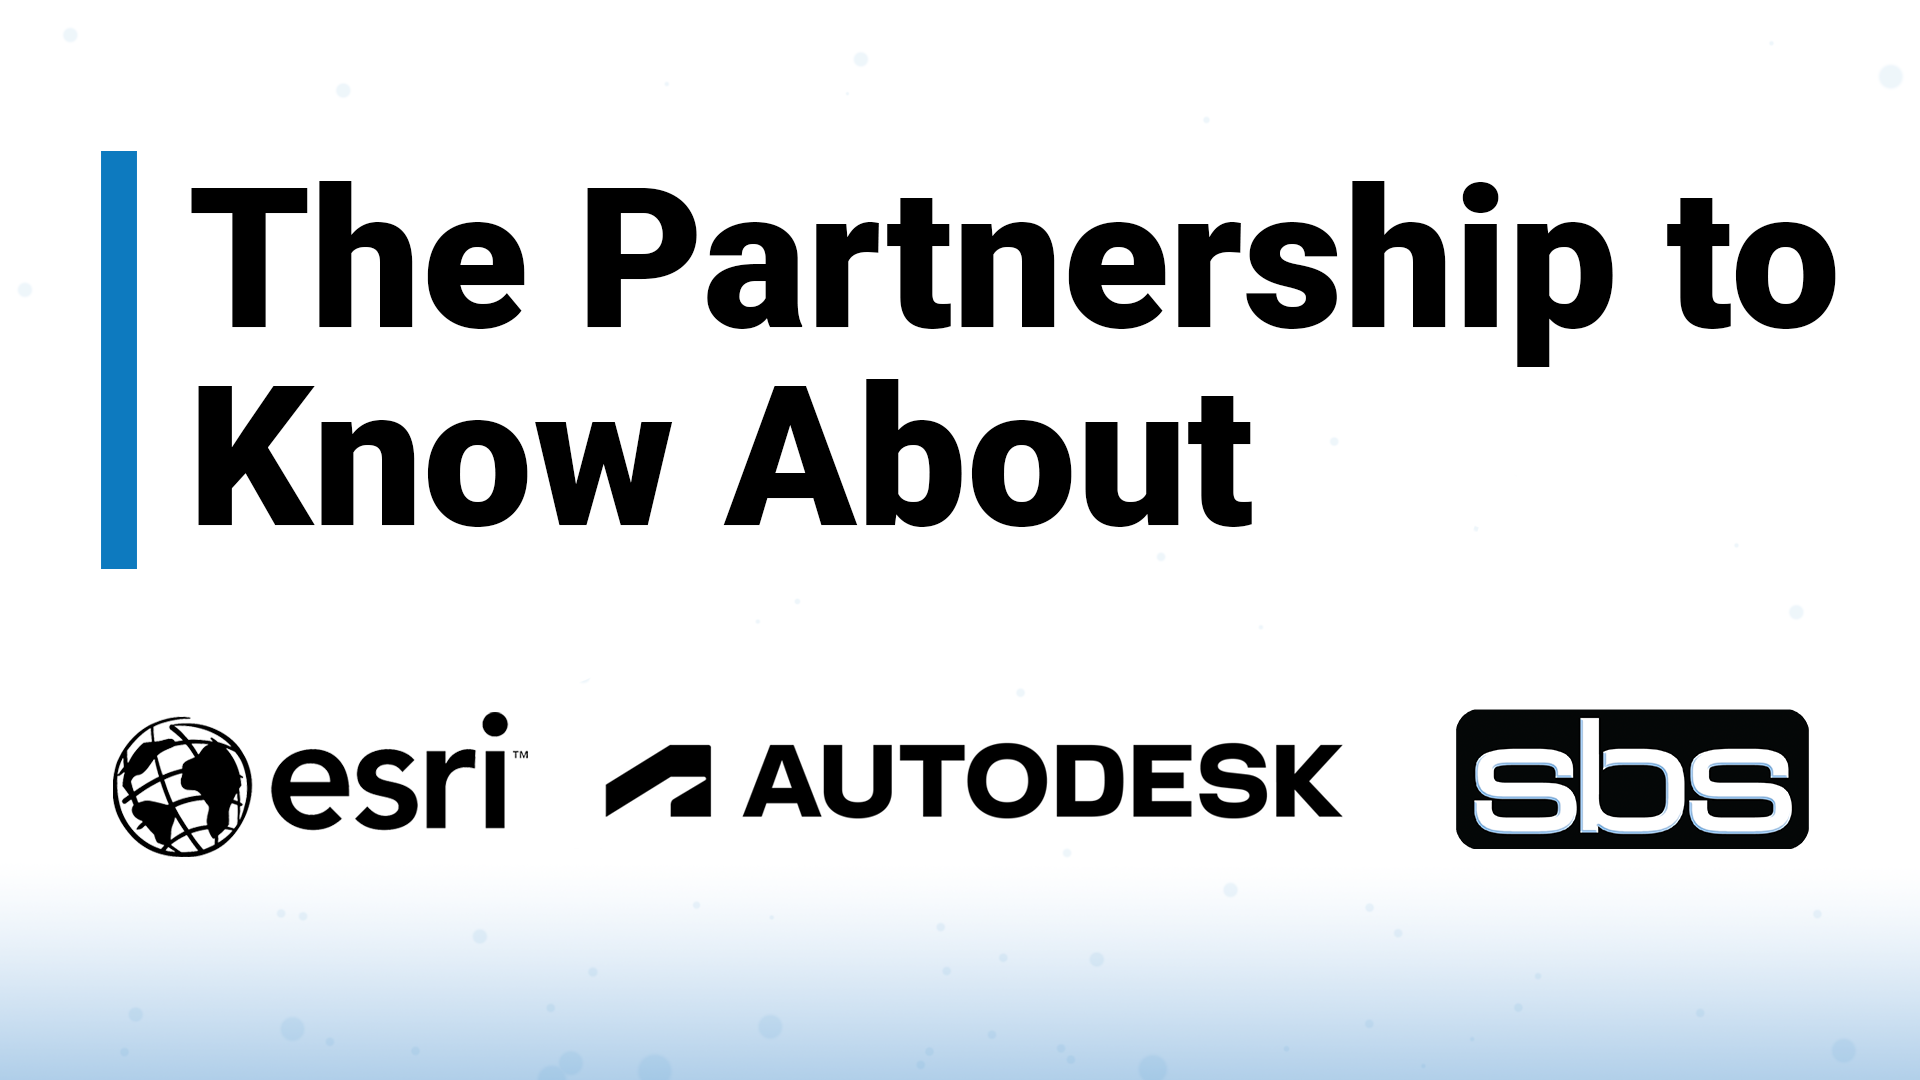 Partnership Between Autodesk, Esri and SBS